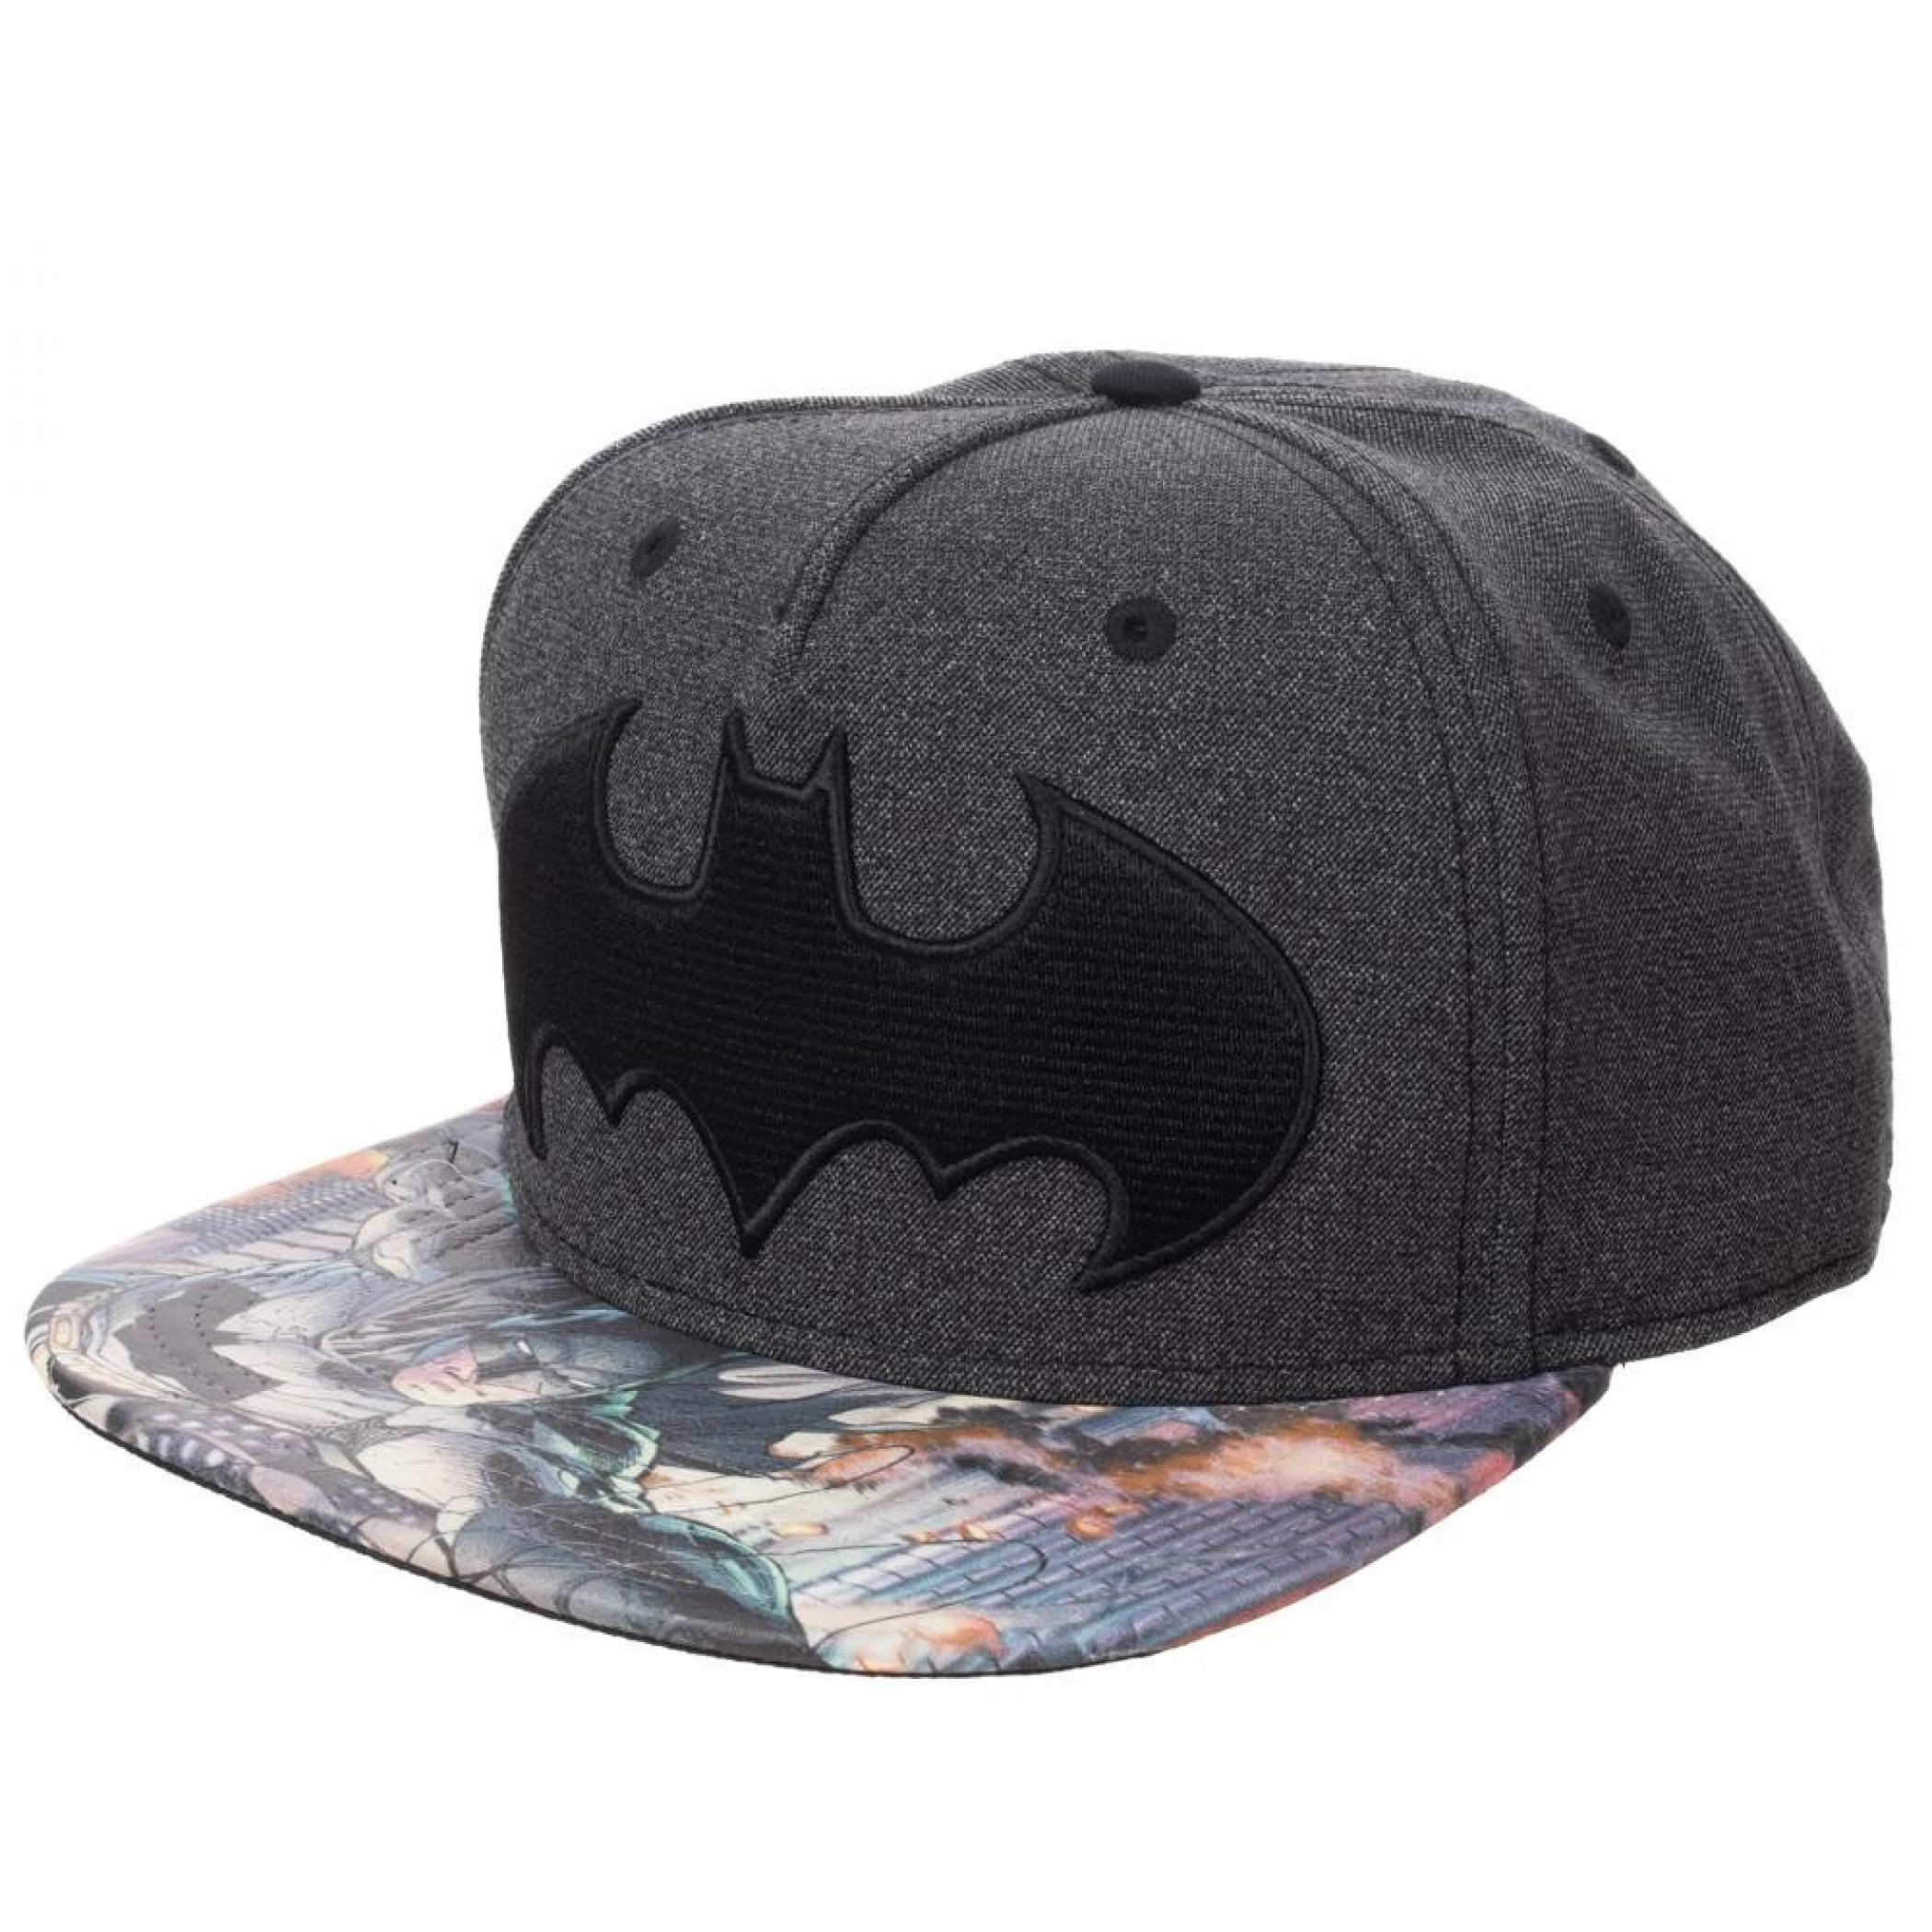 Batman Sublimated Bill Snapback Hat